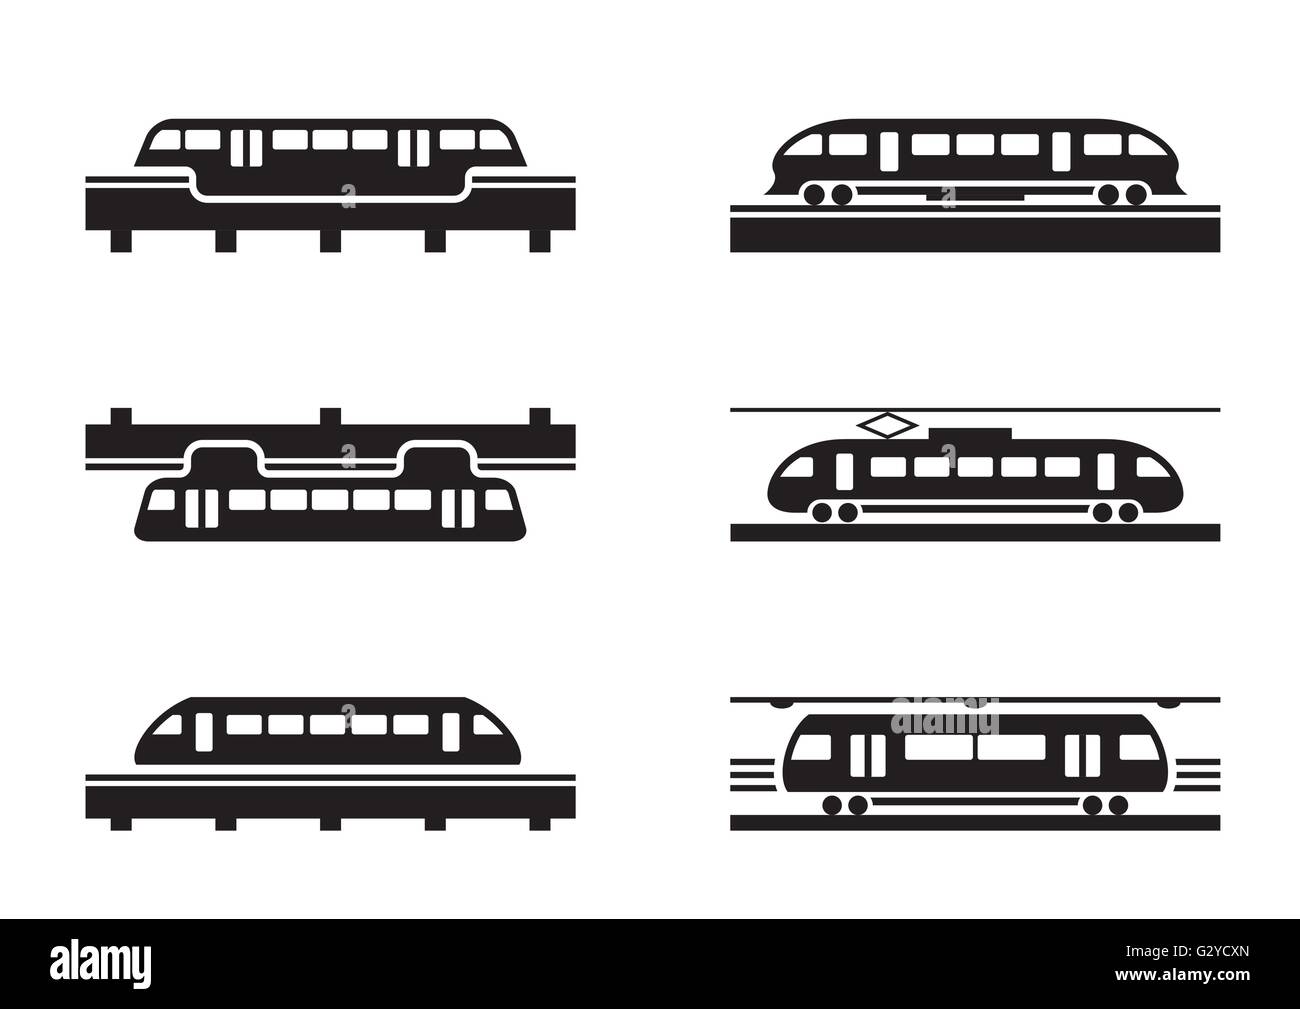 High-speed rail trains - vector illustration Stock Vector